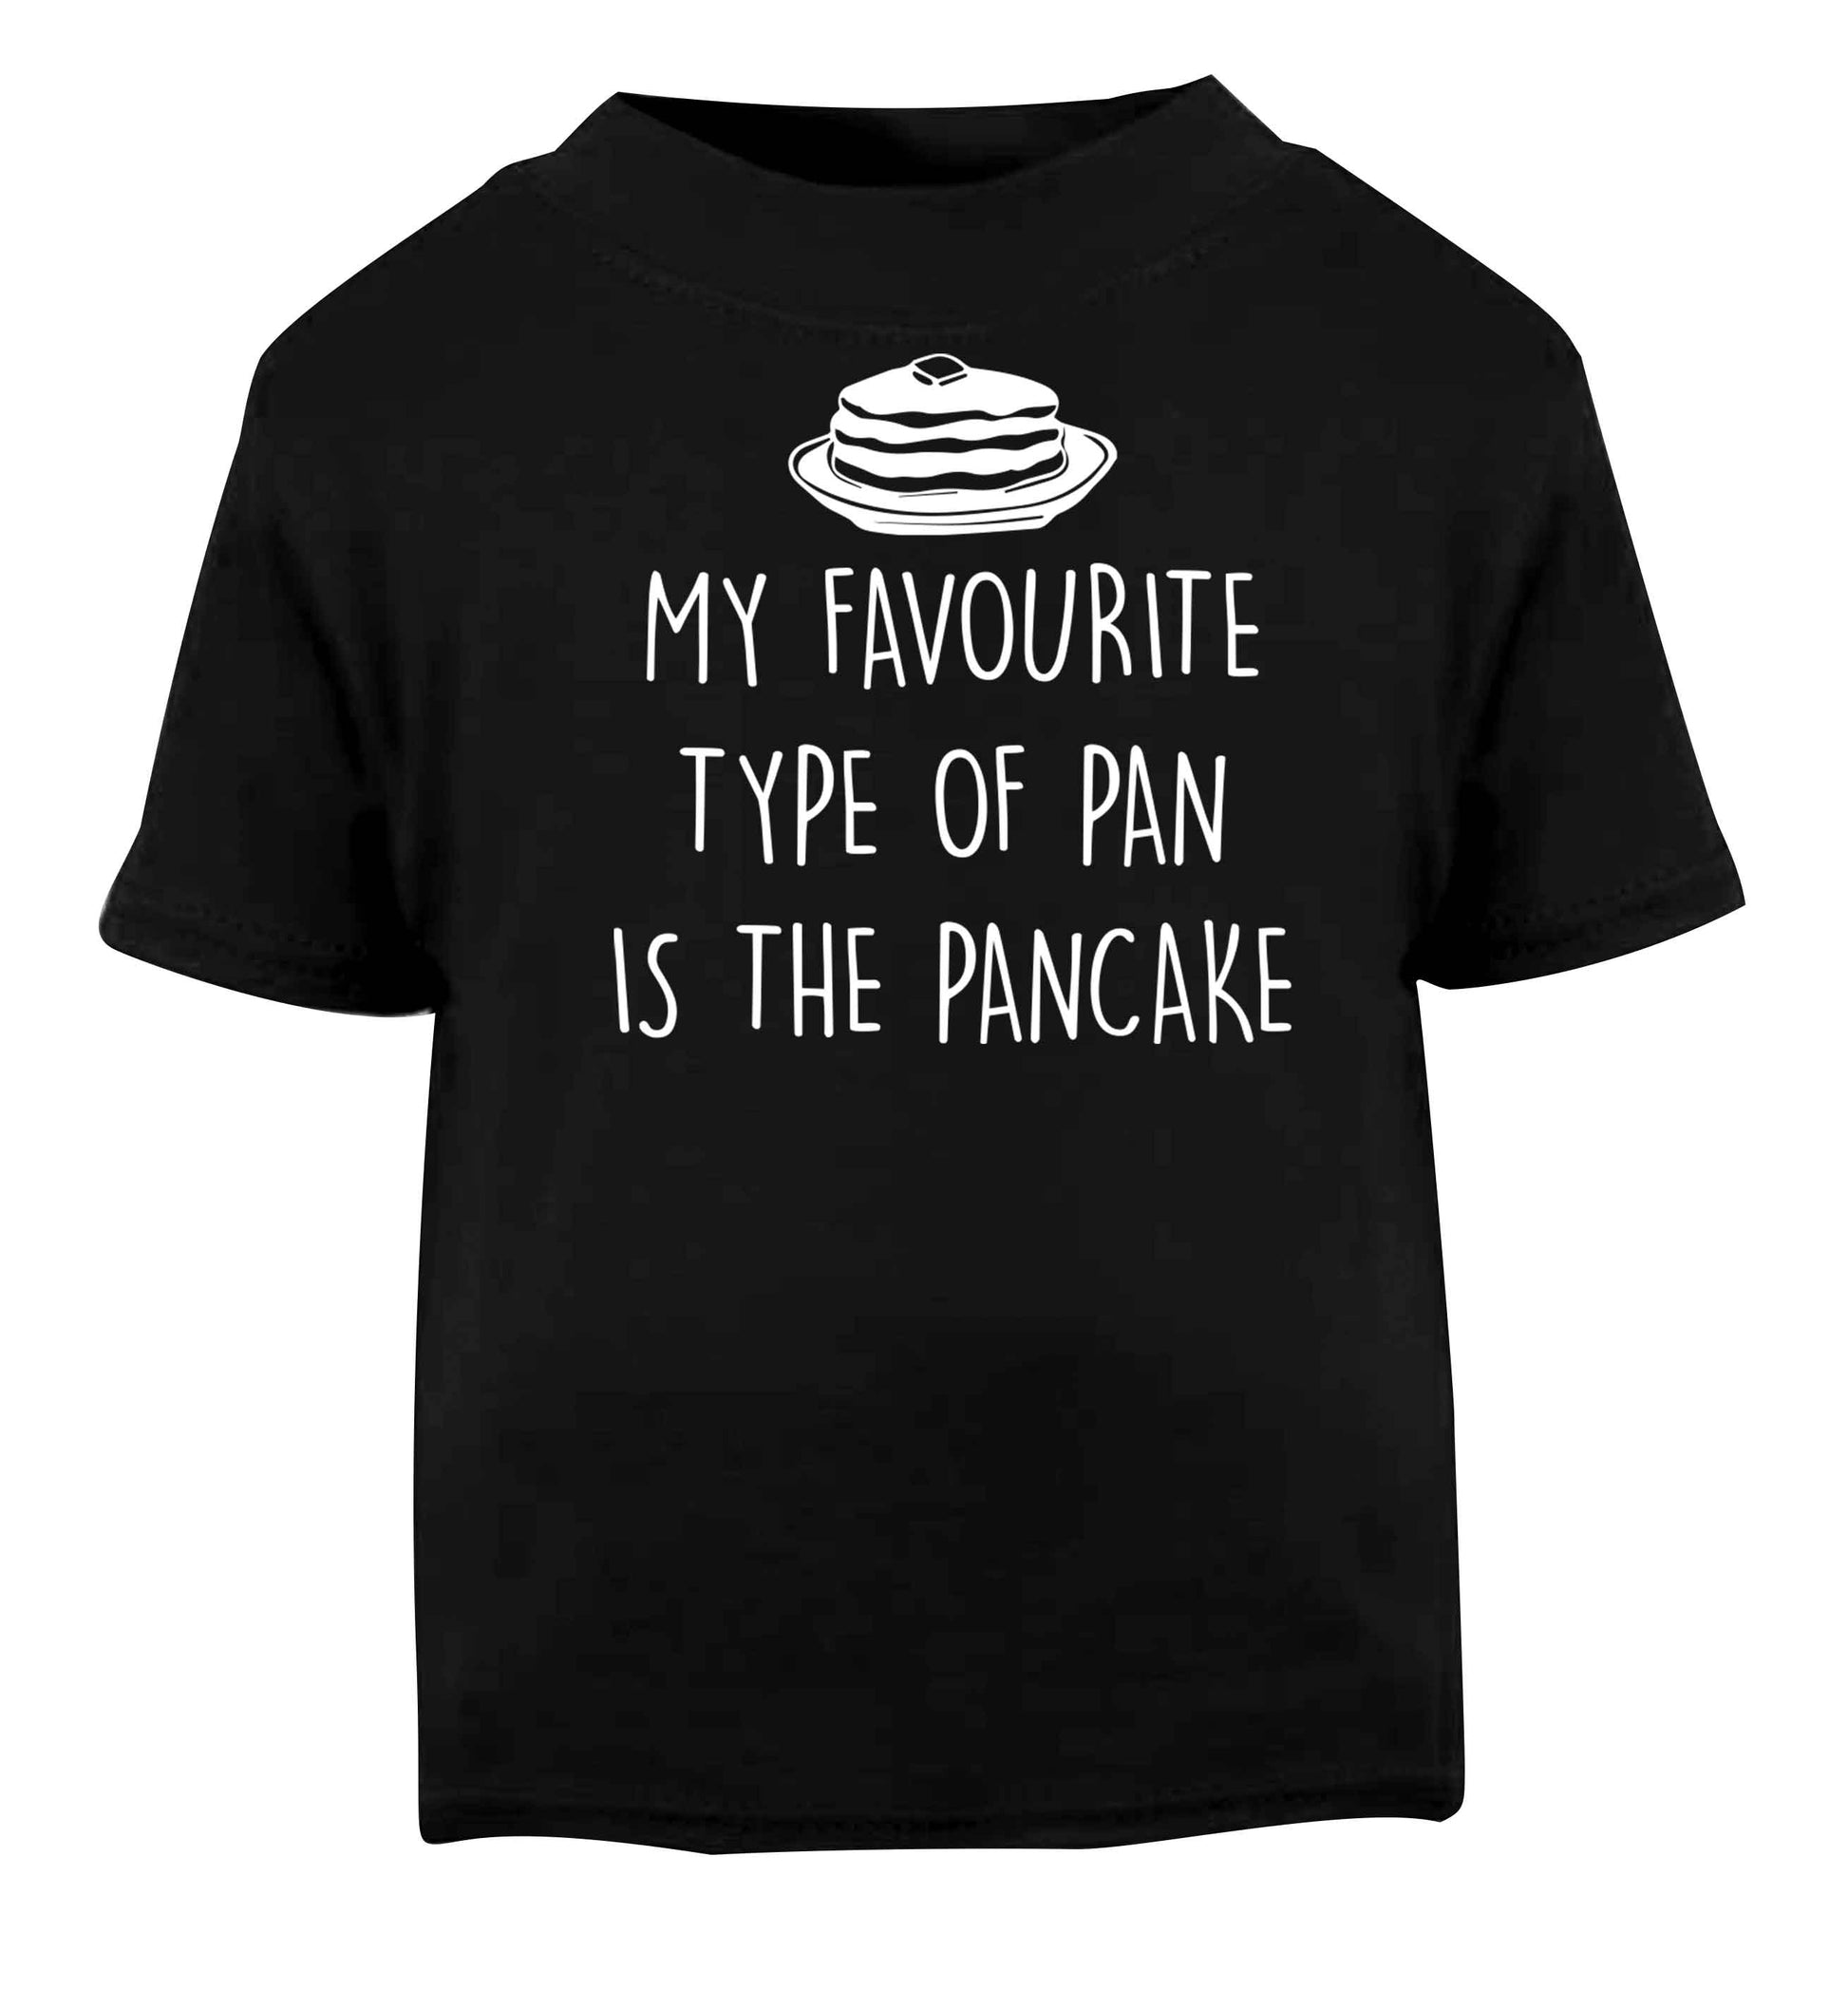 My favourite type of pan is the pancake Black baby toddler Tshirt 2 years